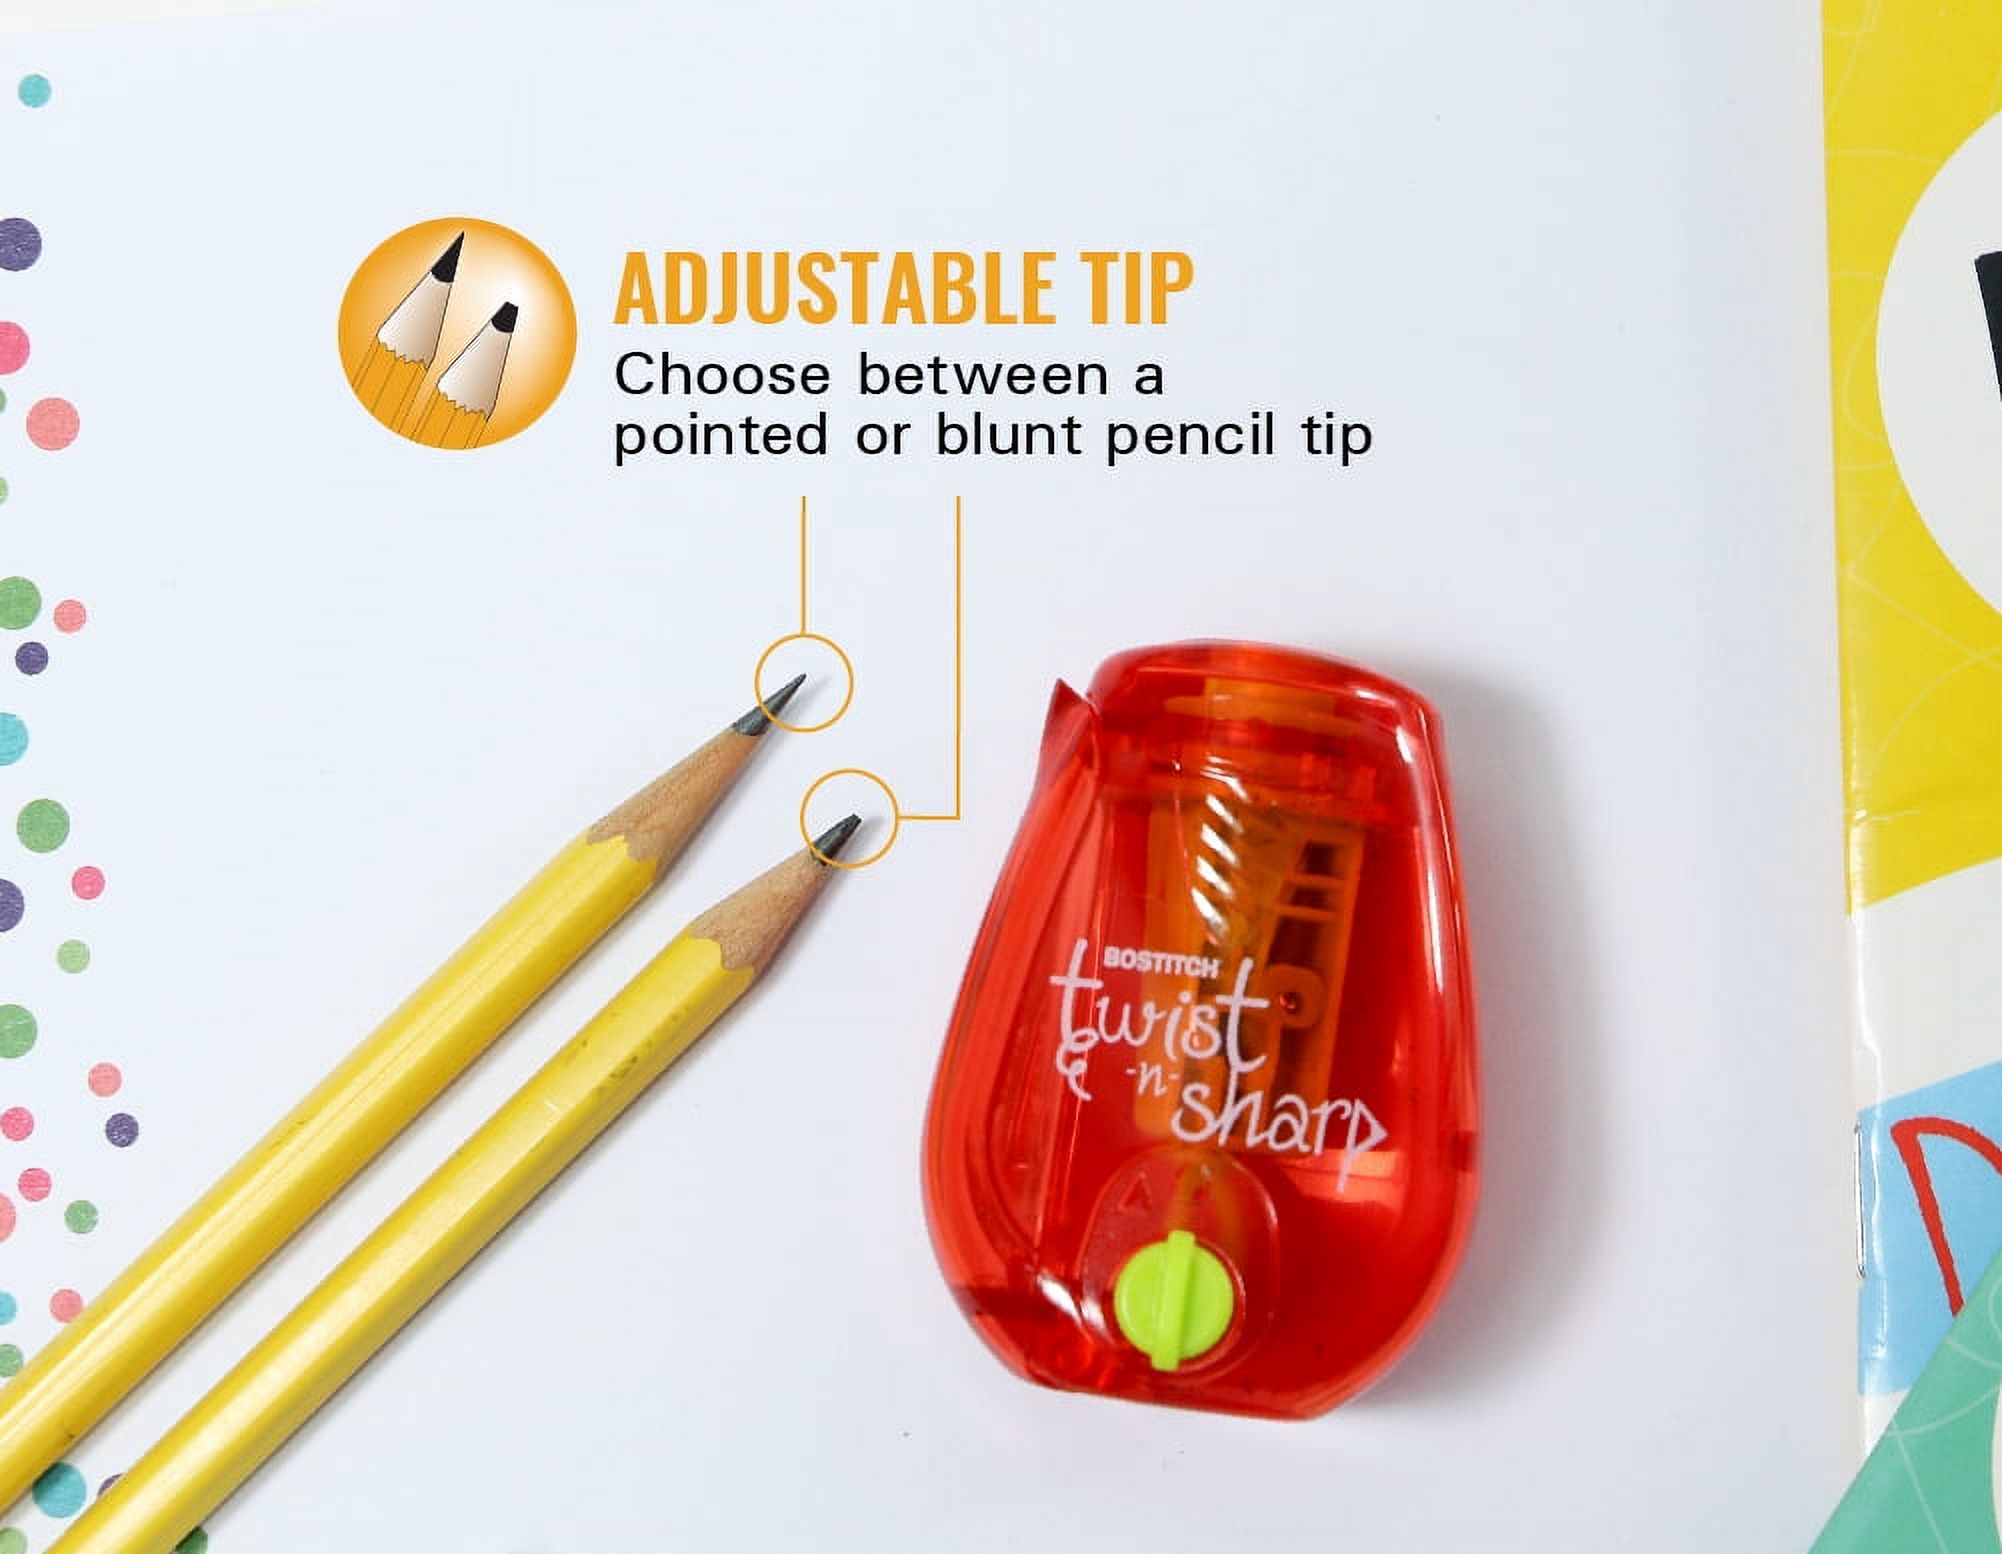 Bostitch Twist-n-Sharp Manual Pencil Sharpener, Assorted Colors - image 5 of 9